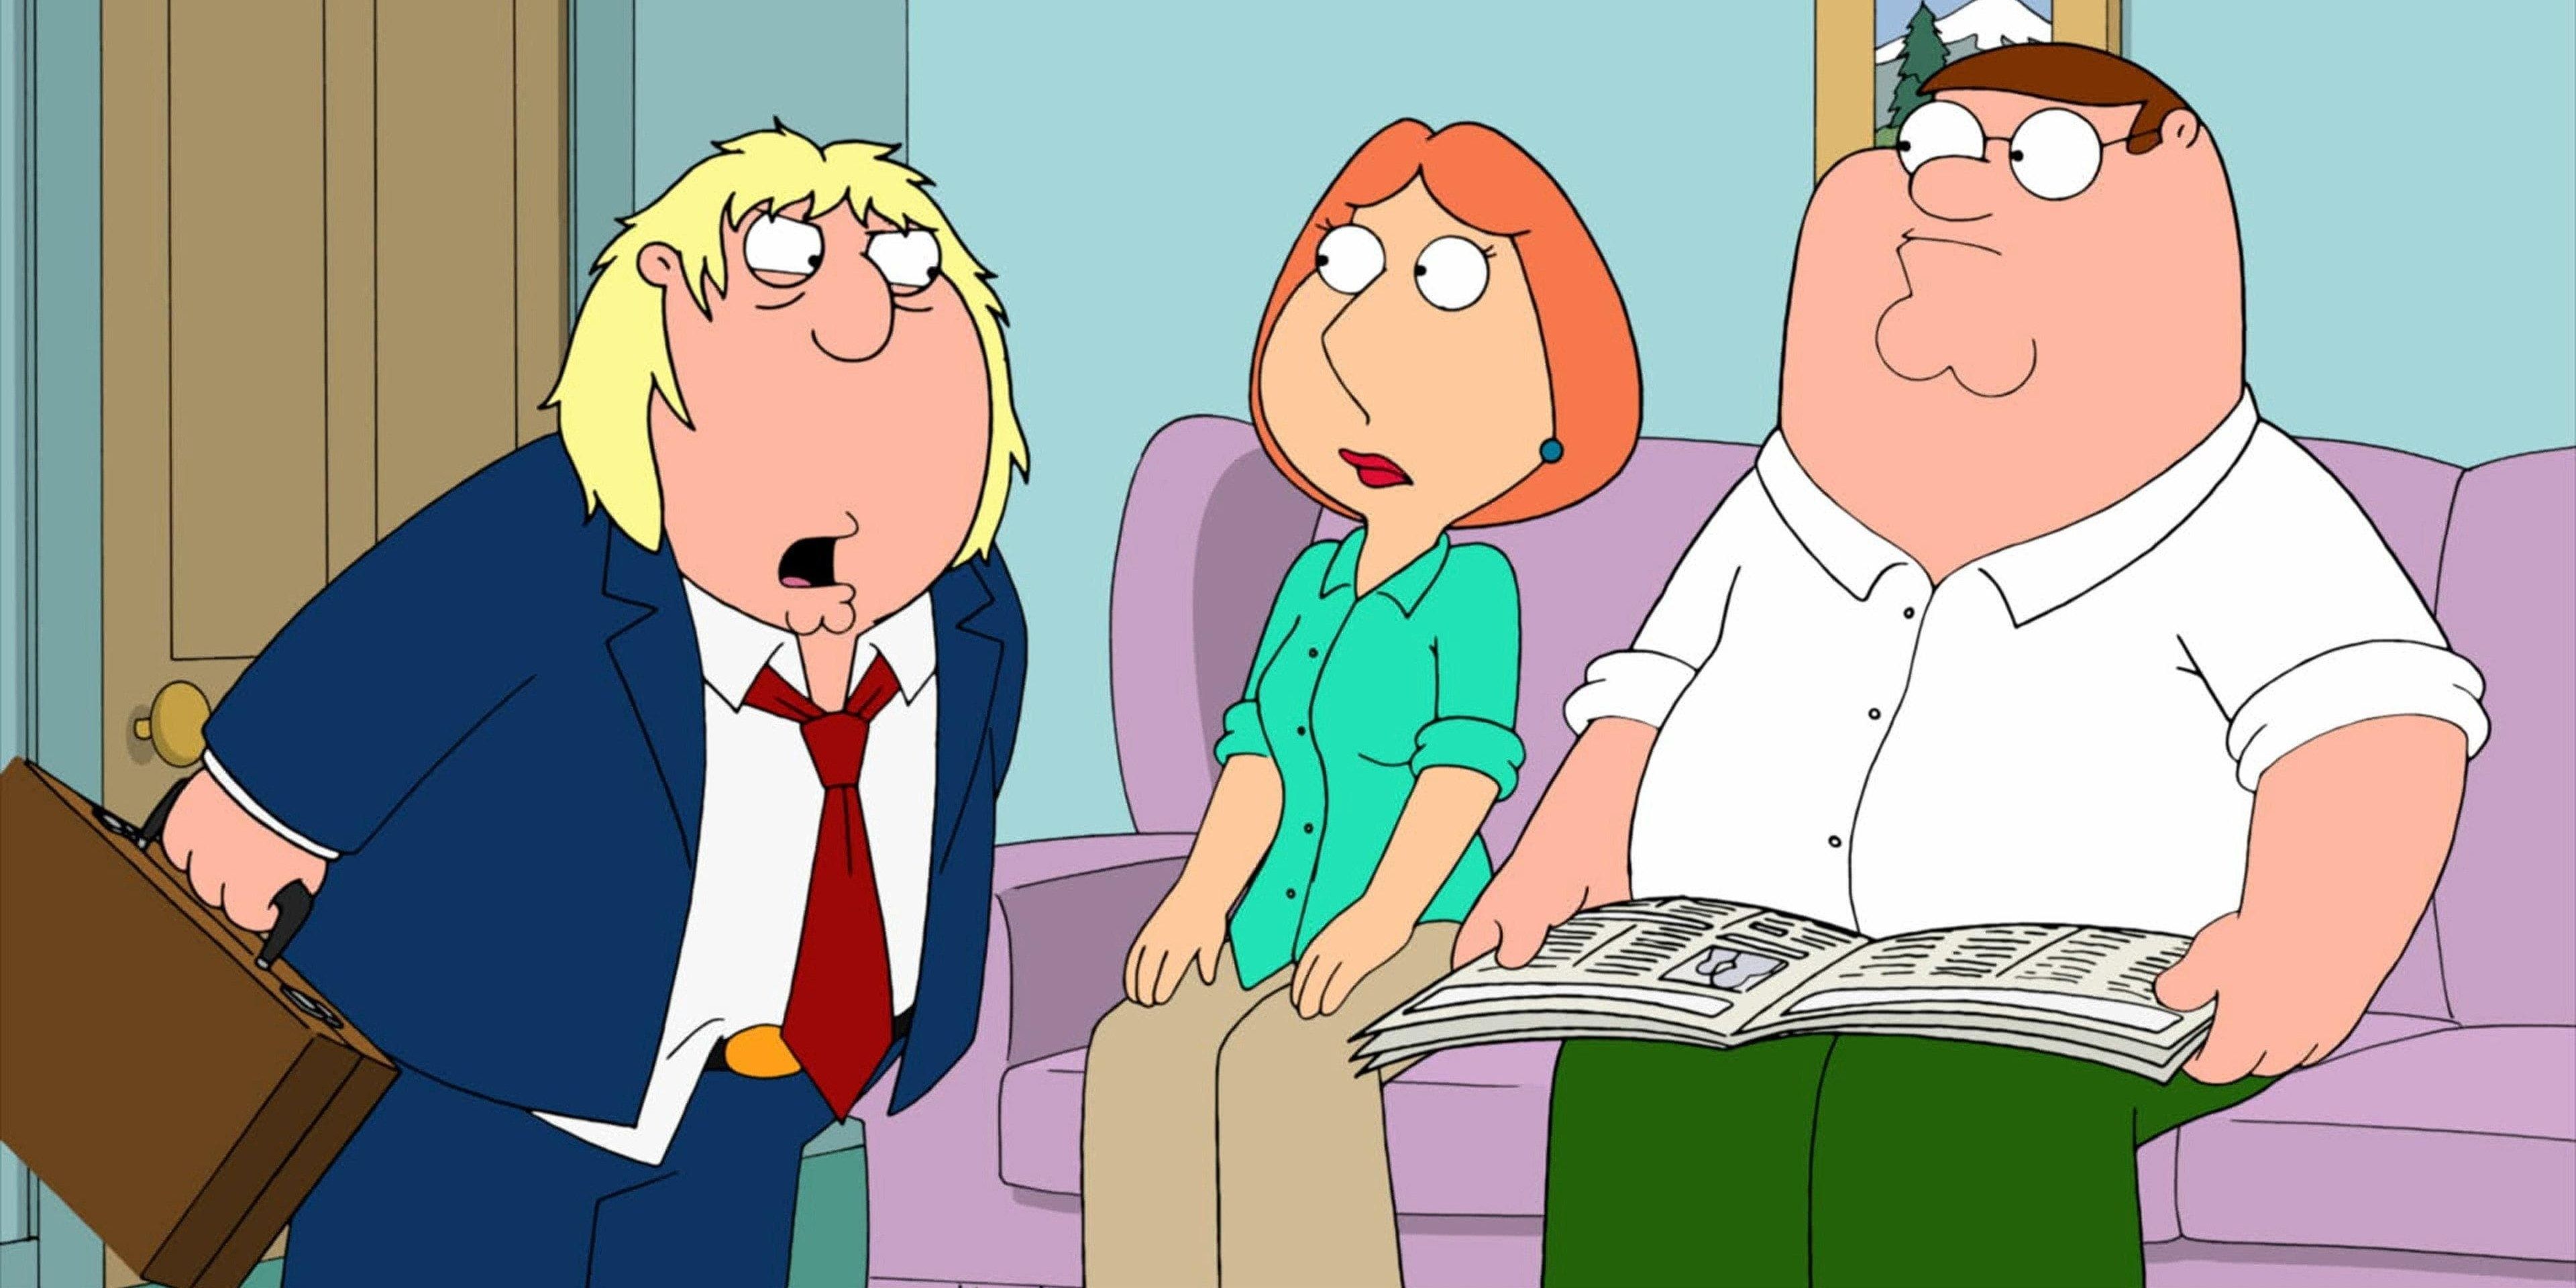 Family Guy 10 Best Season 9 Episodes According To IMDb